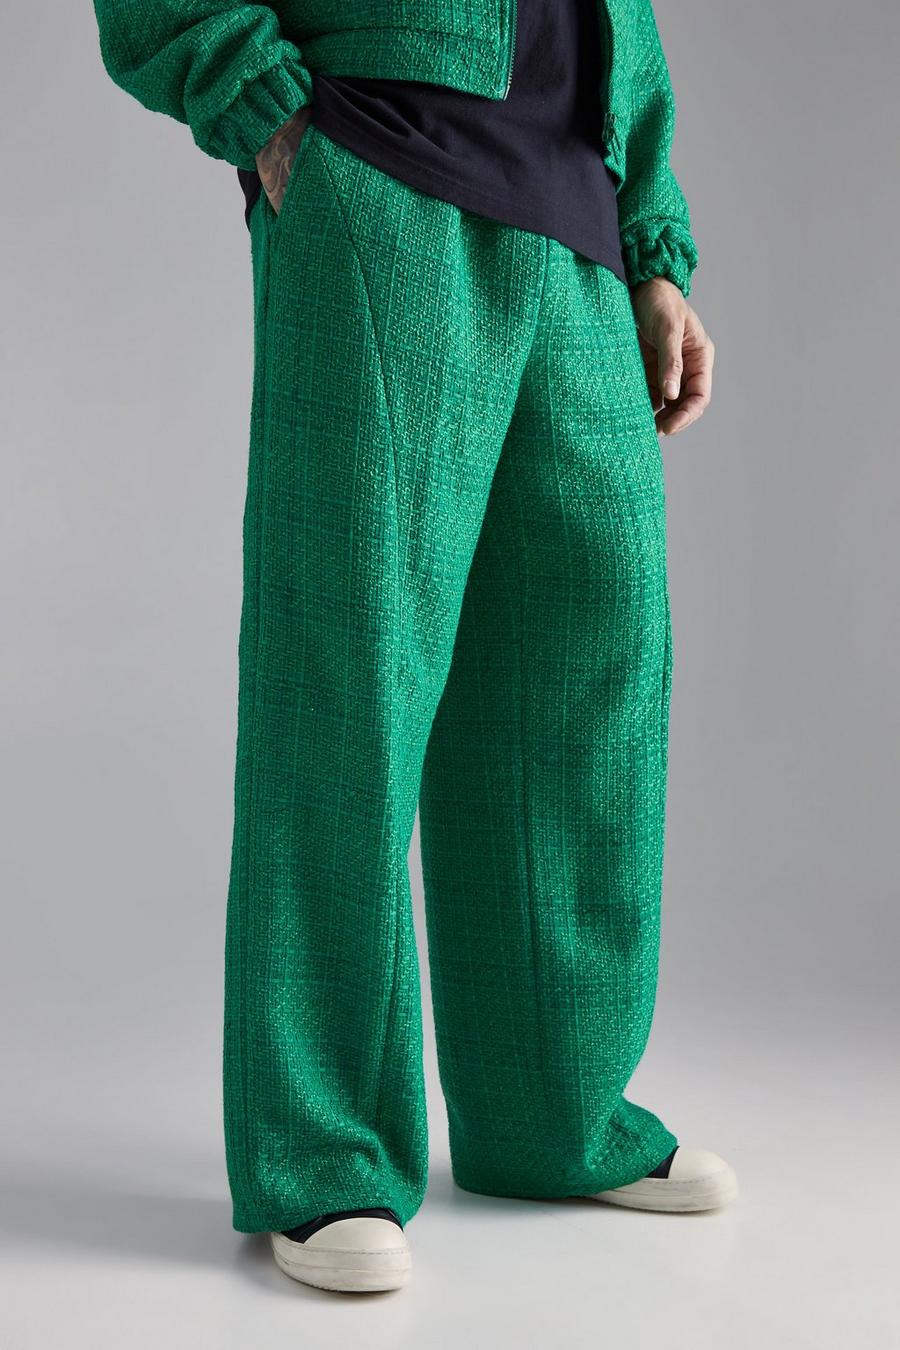 Pantalón deportivo Tall de pernera ancha y tejido bouclé, Green